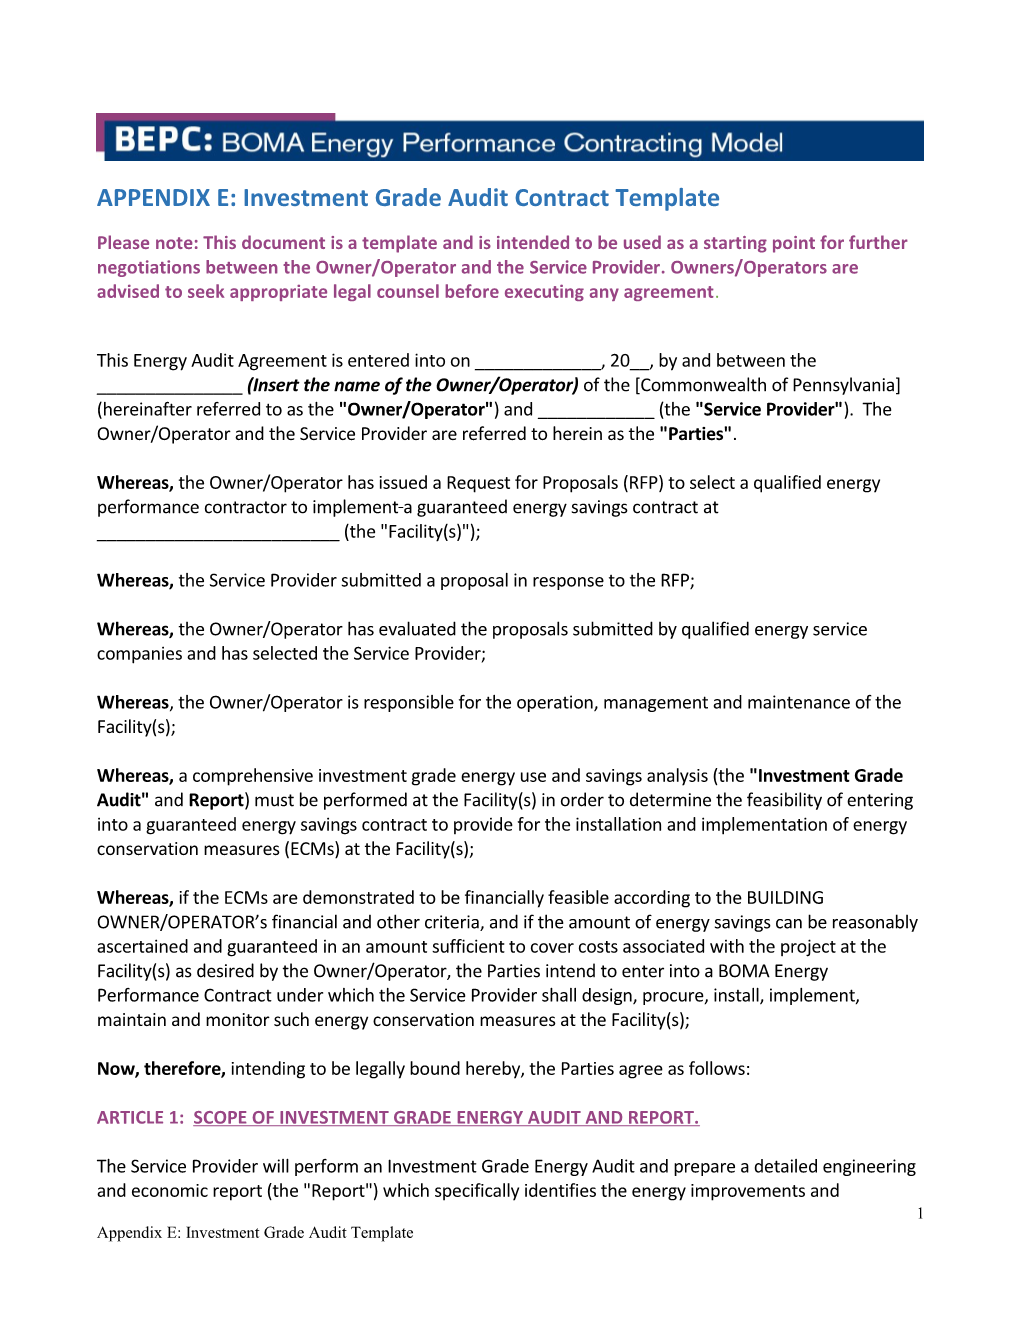 Investment Grade Audit Agreement